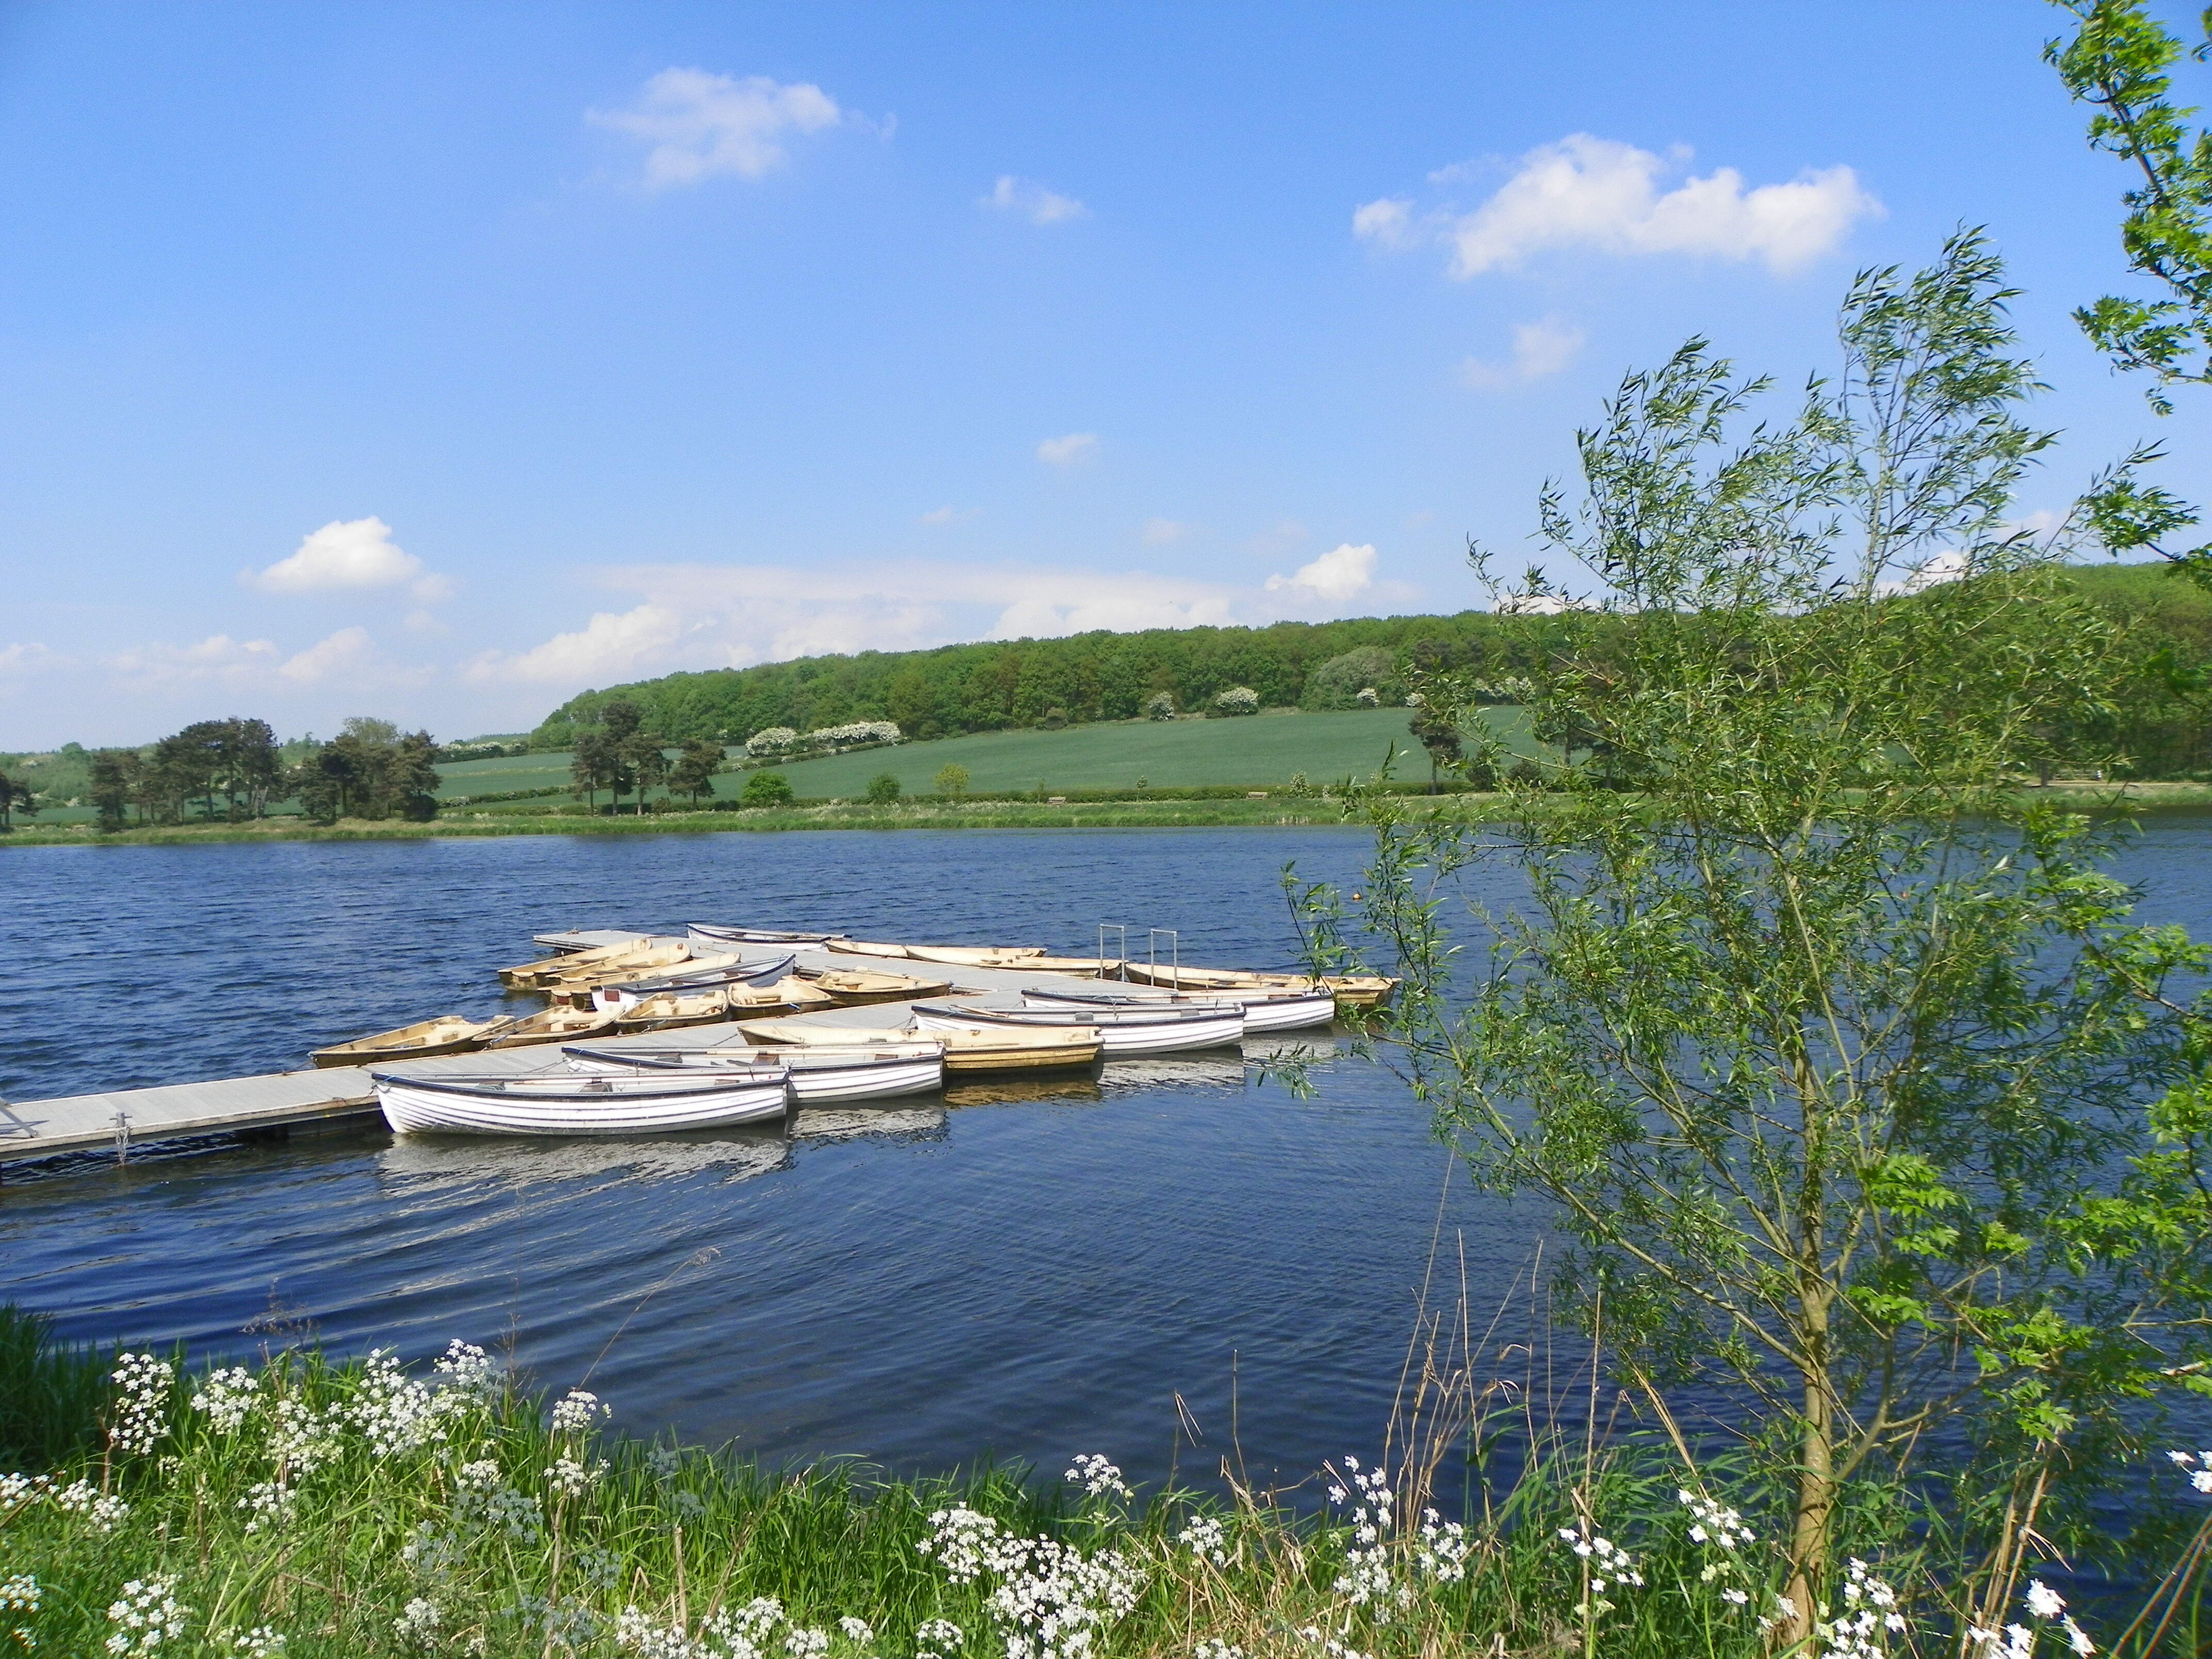 Thornton Reservoir